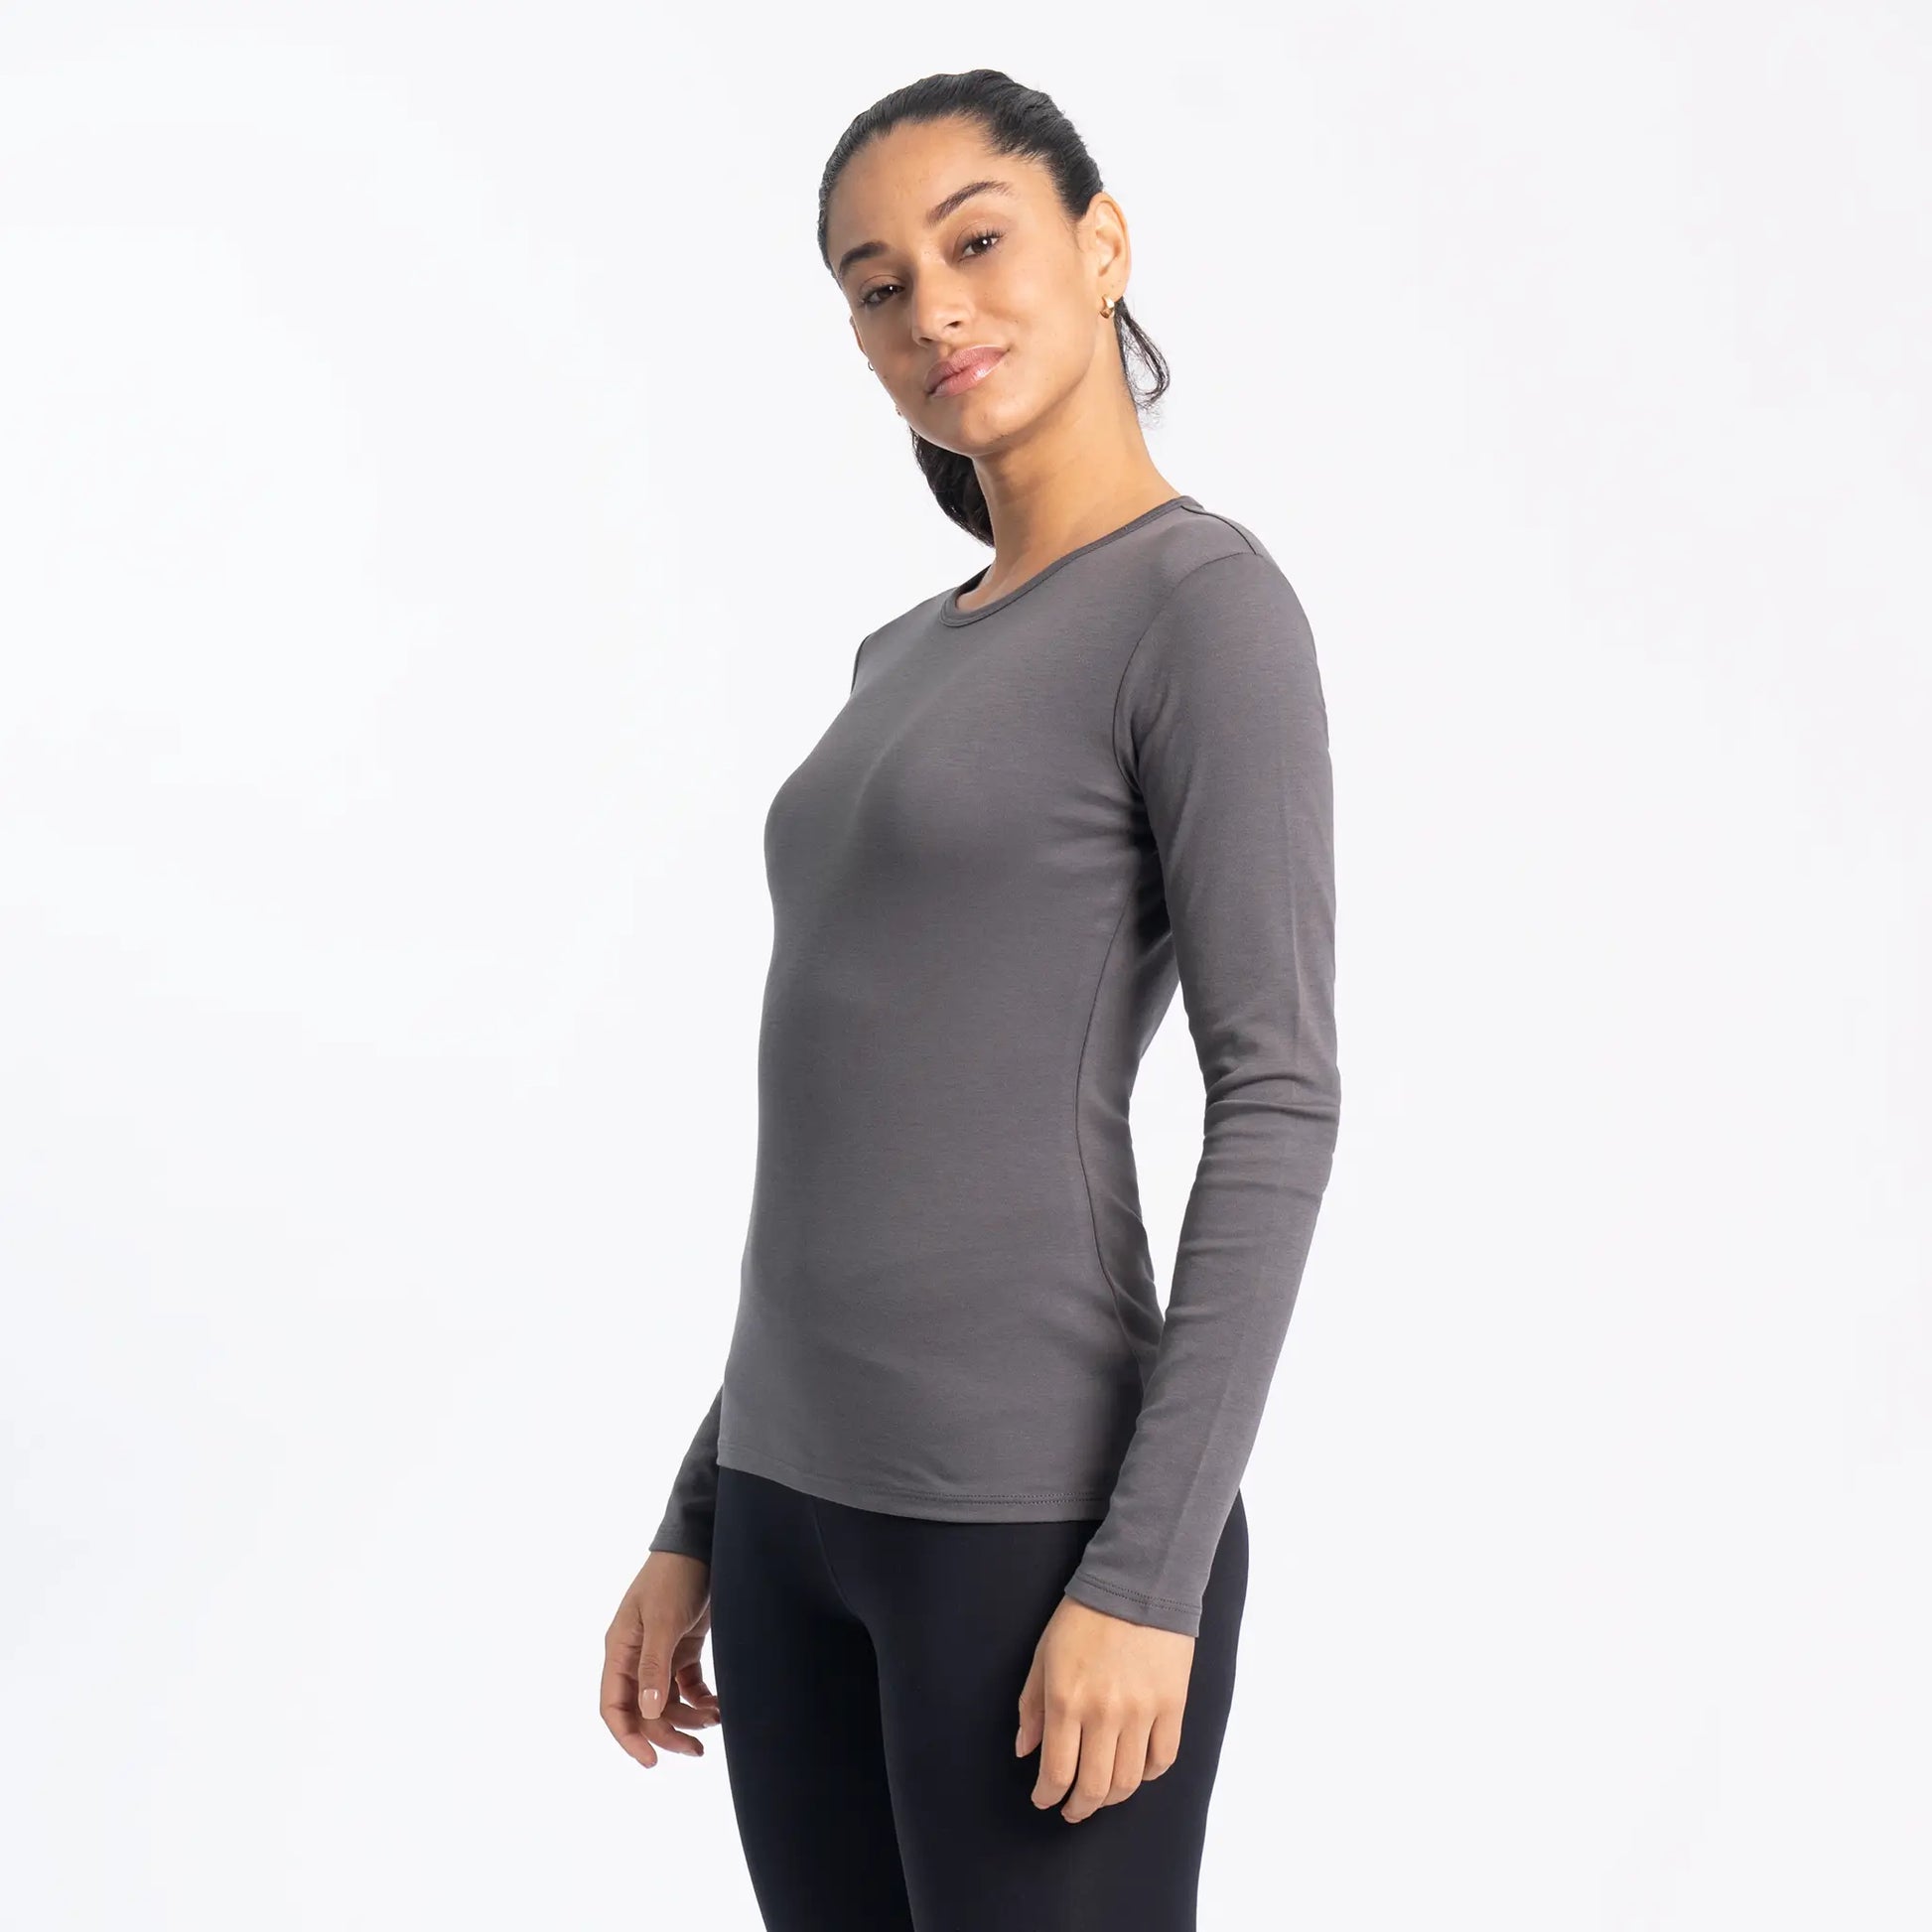 womens eco friendly tshirt long sleeve color gray